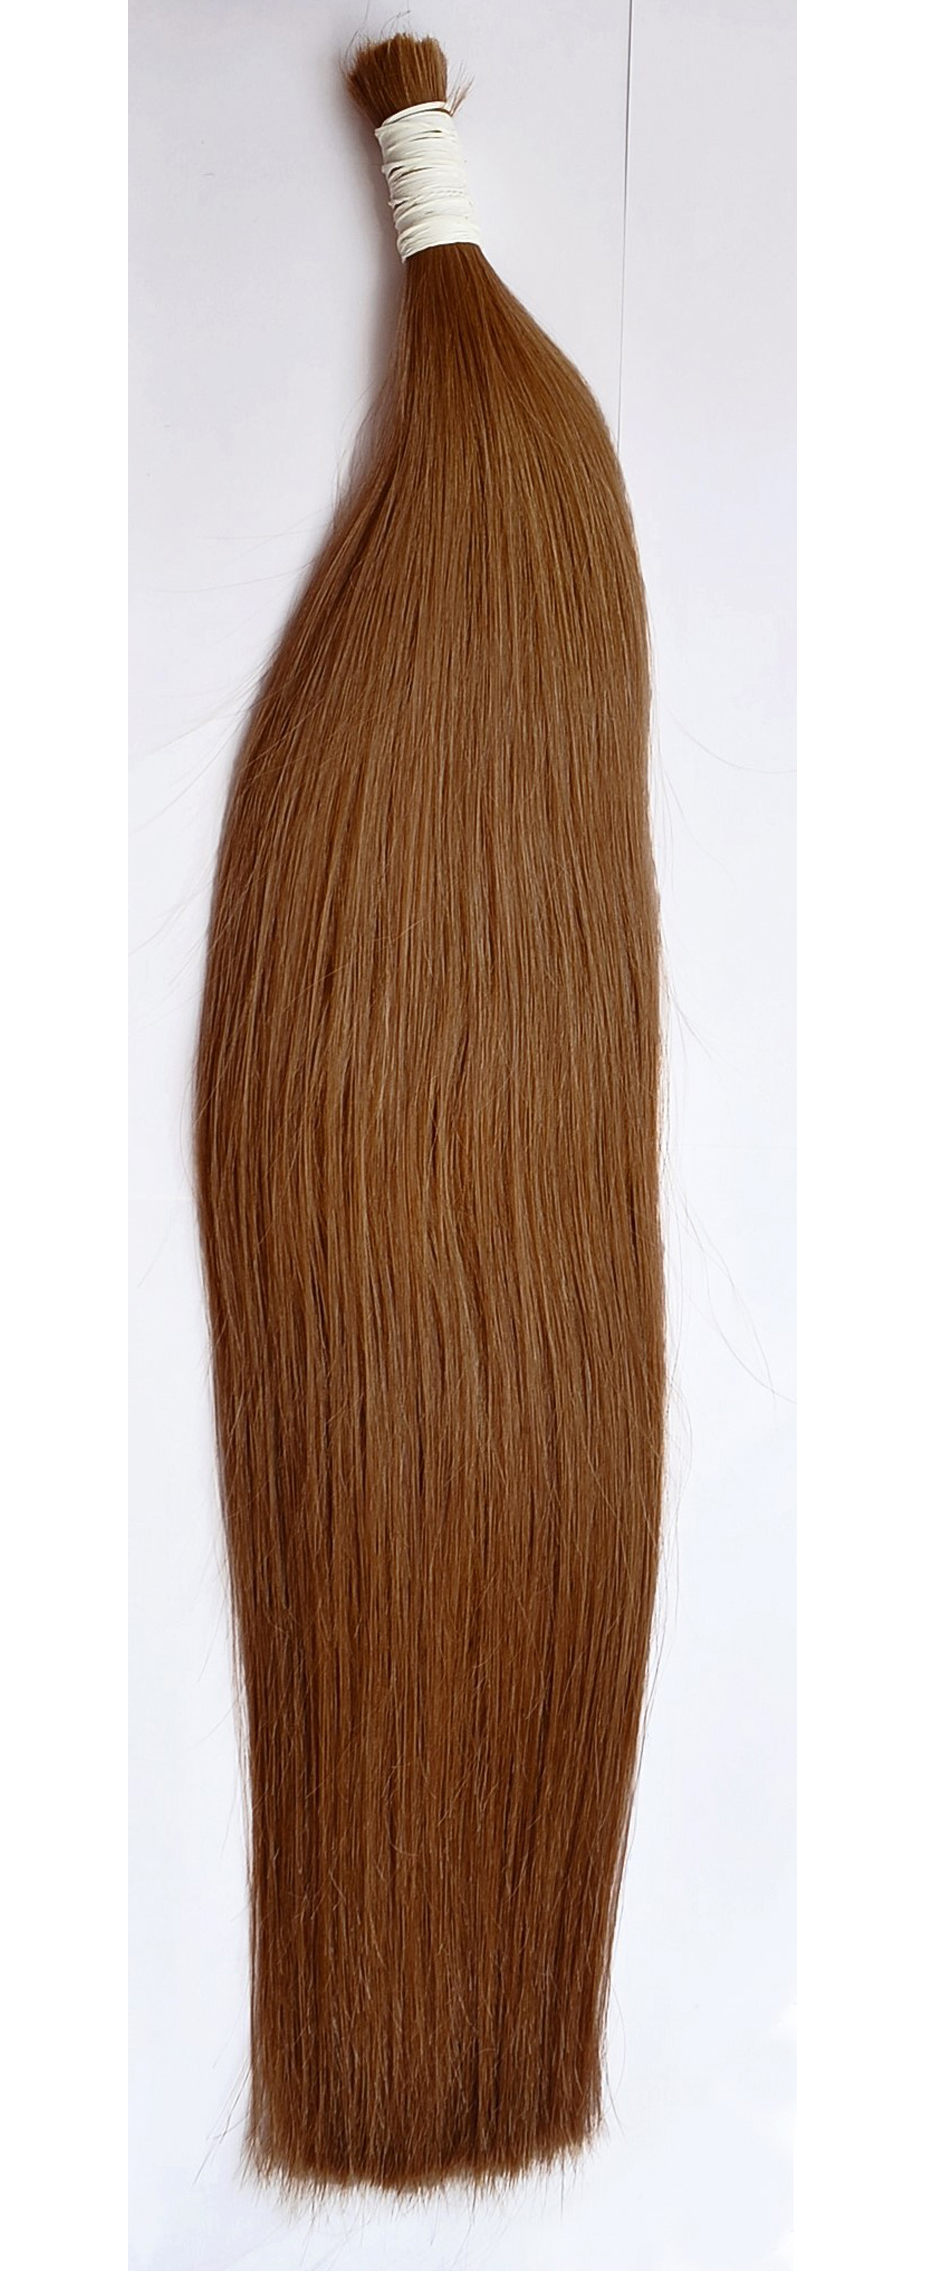 100 Грамм волос Славянка для наращивания 60см